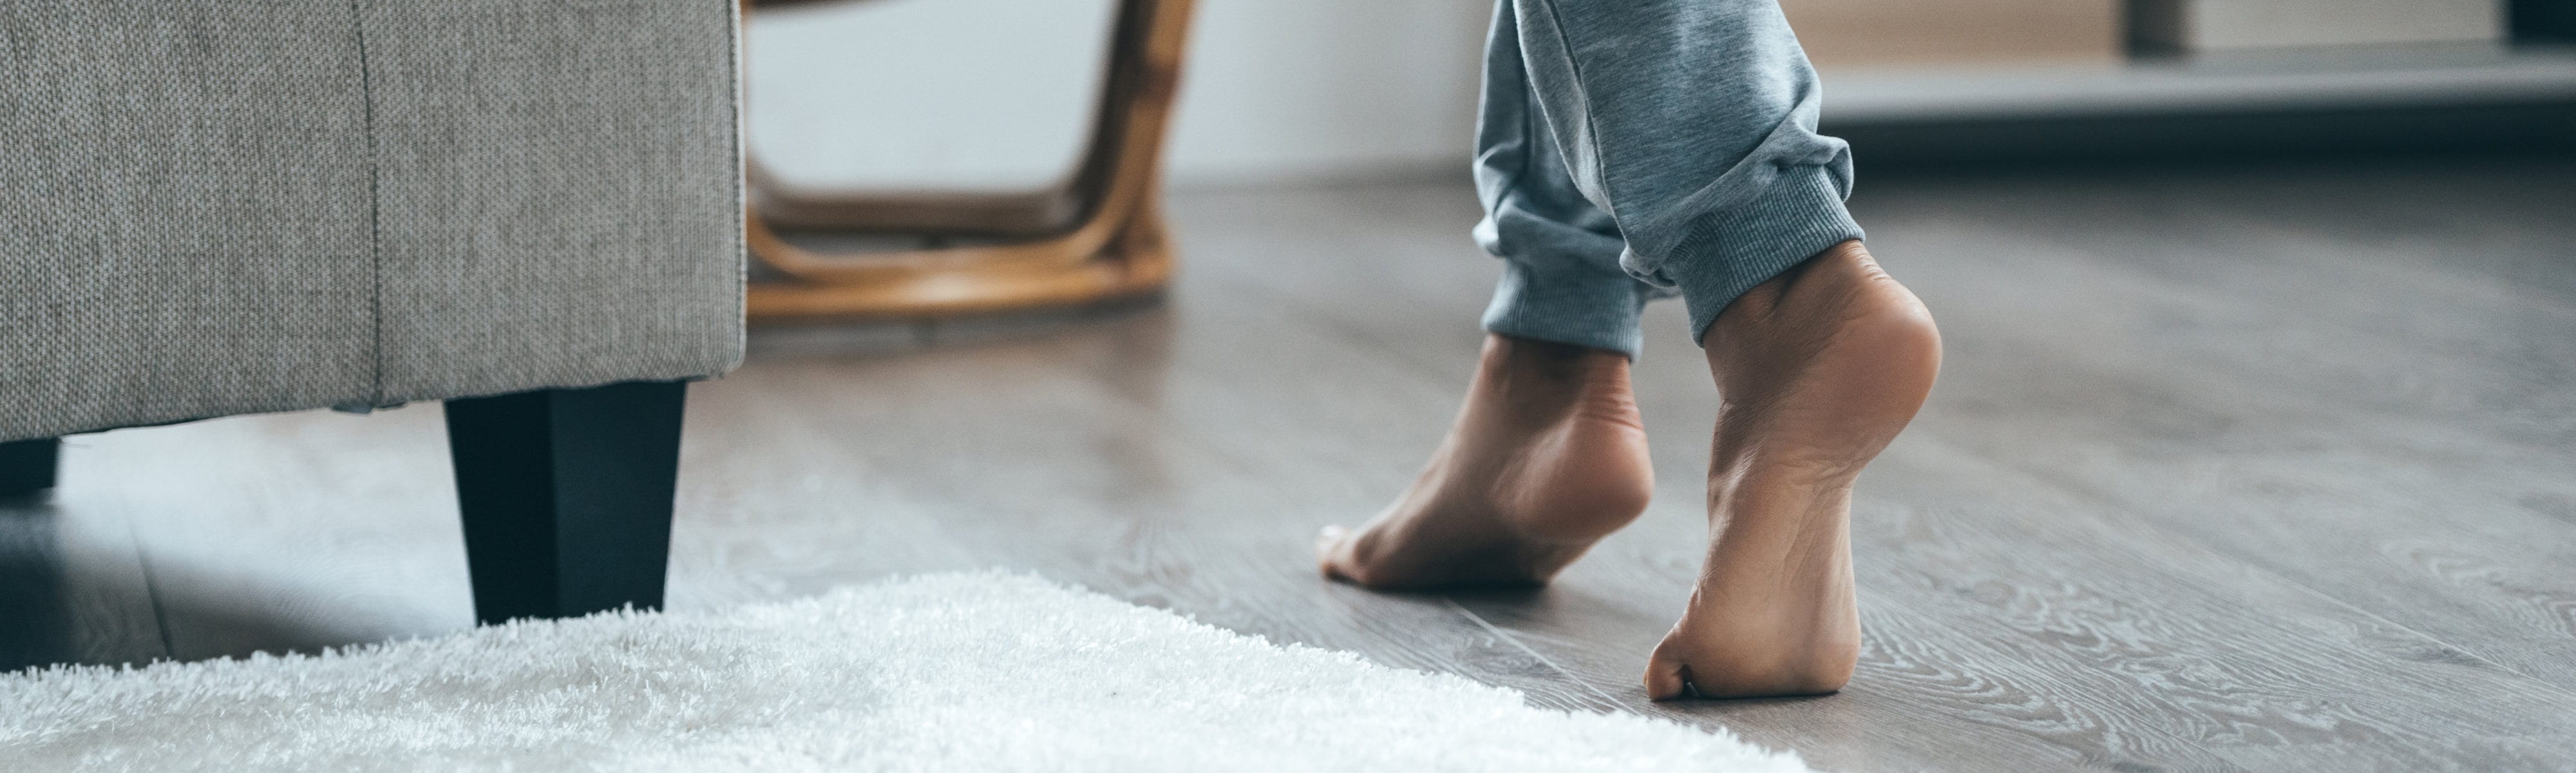 Woman walking barefoot on a warm floor.